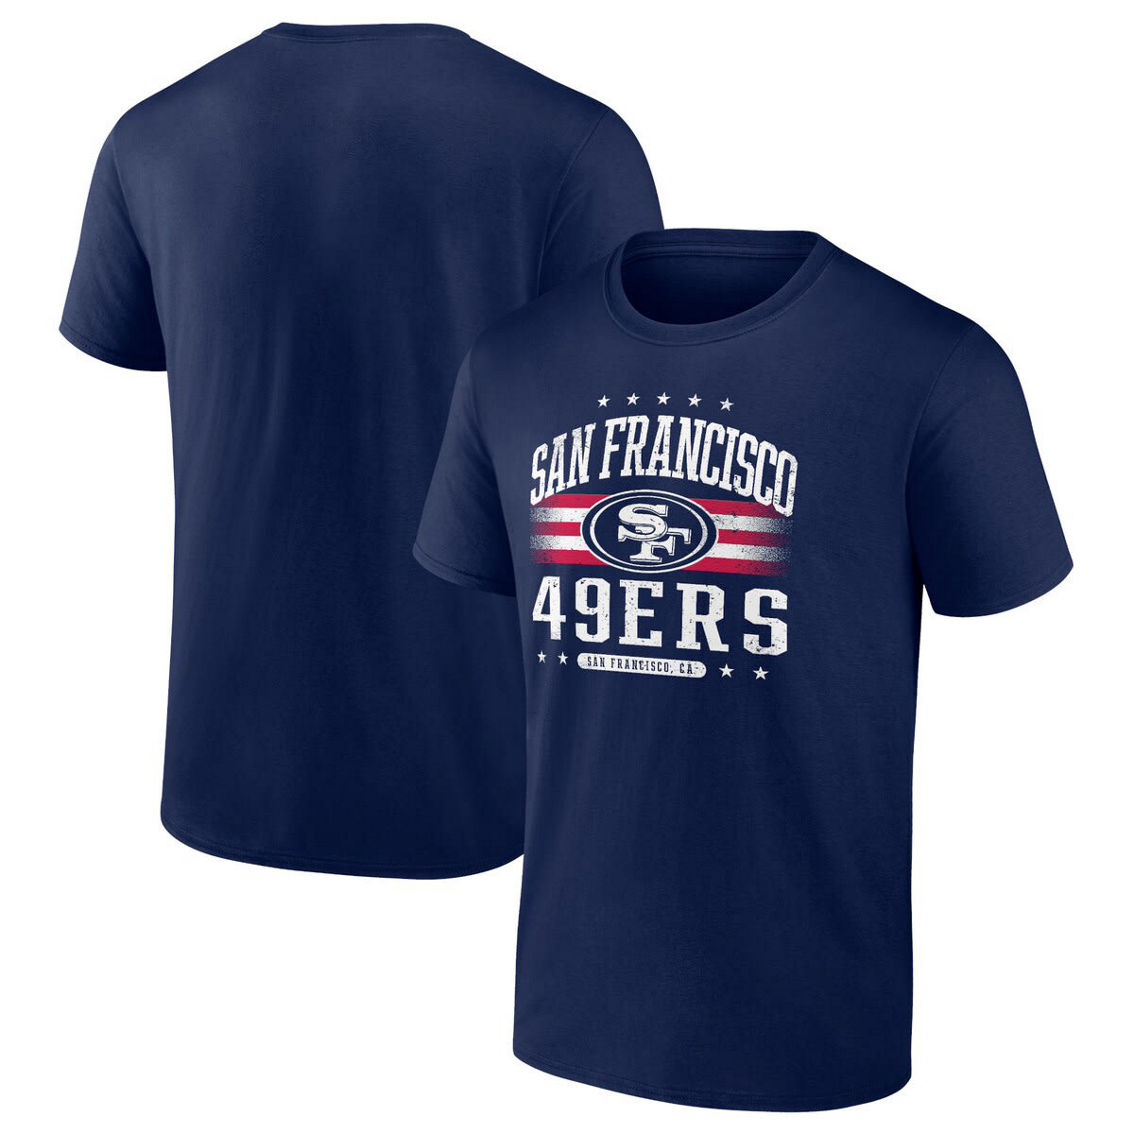 Fanatics Branded Men's Navy San Francisco 49ers Americana T-Shirt - Image 2 of 4